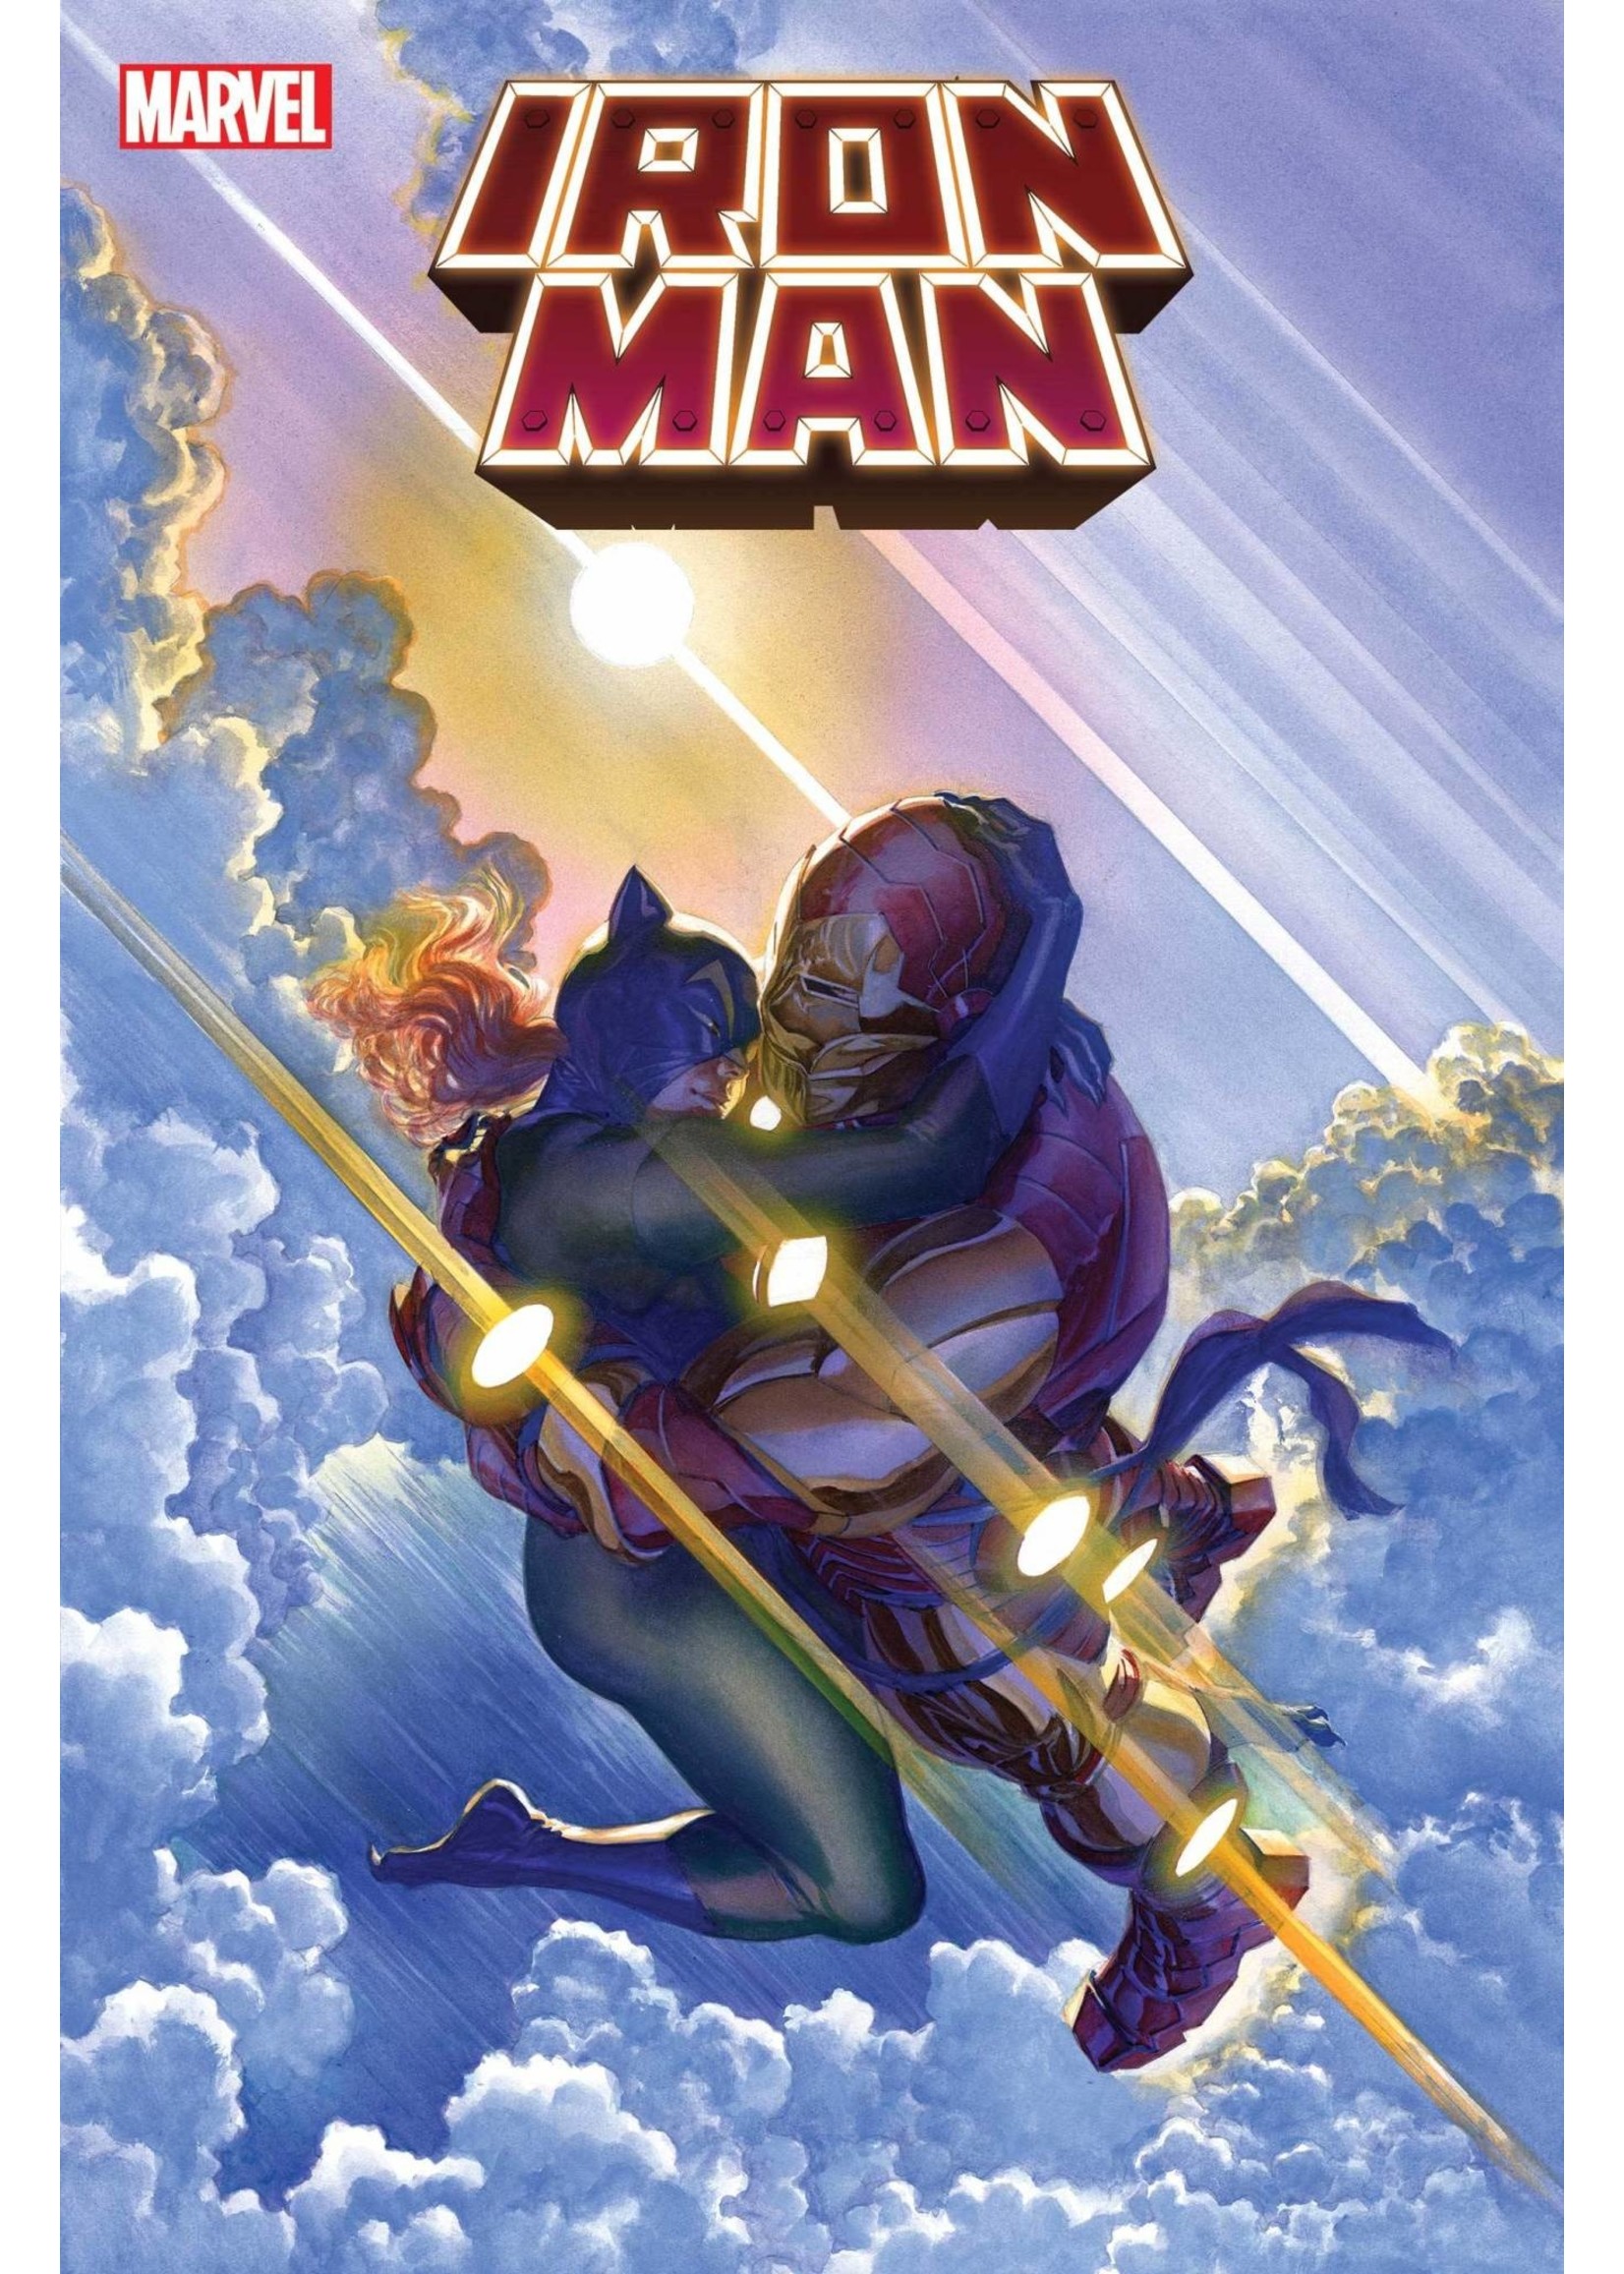 MARVEL COMICS IRON MAN #20